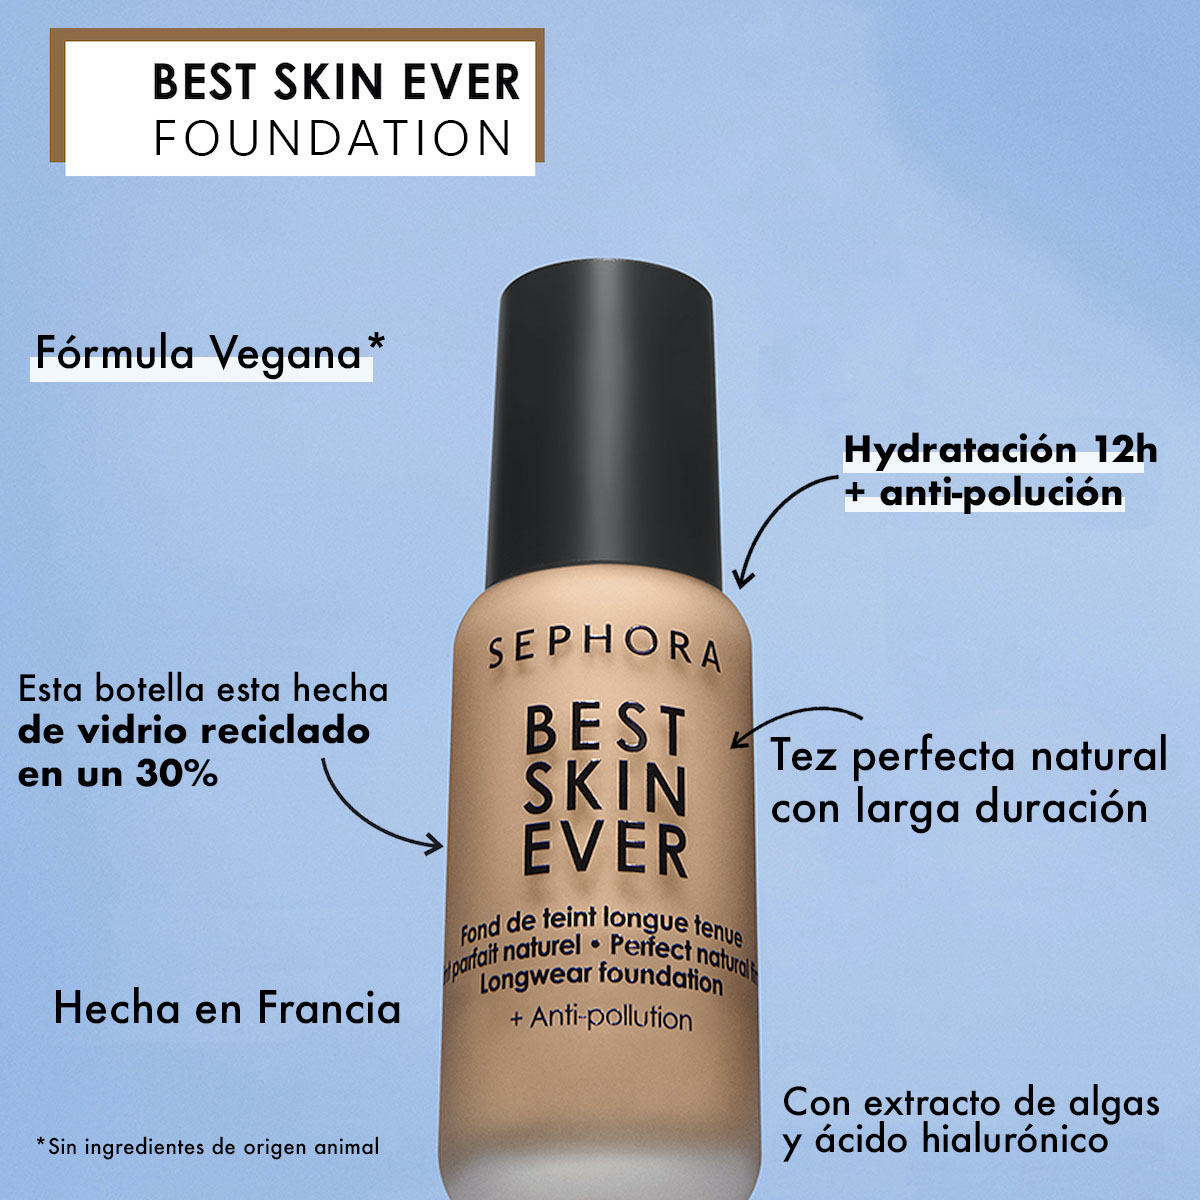 BEST SKIN EVER LONG WEAR FOUNDATION PERFECT NATURAL COMPLEXION + ANTI-POLLUTION (Base de Maquillaje de Larga Duración)